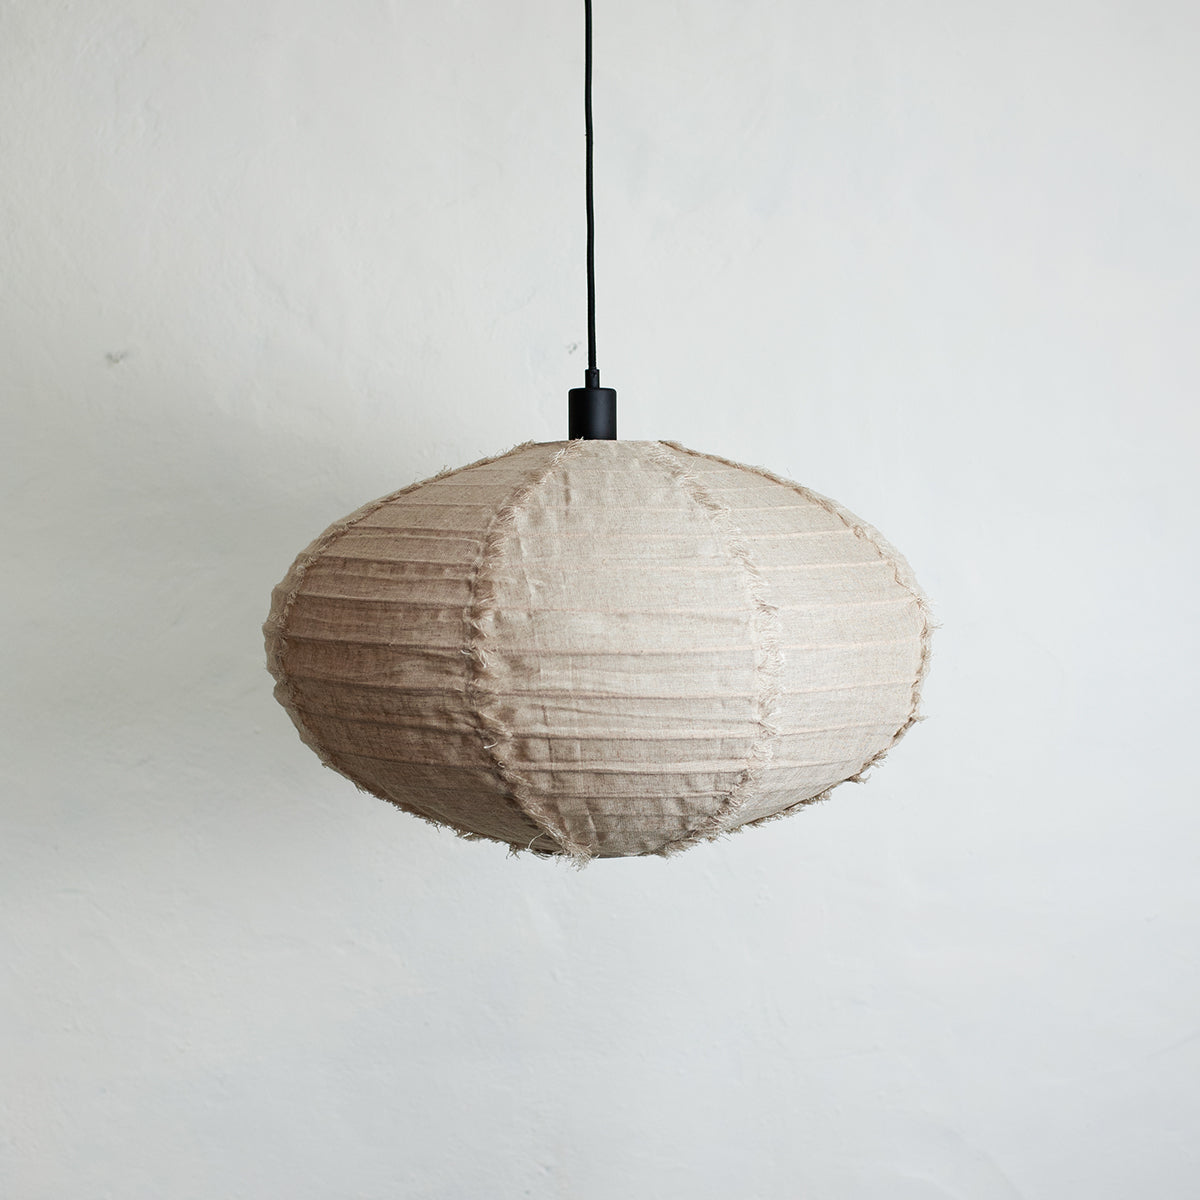 60cm white oval paper lamp